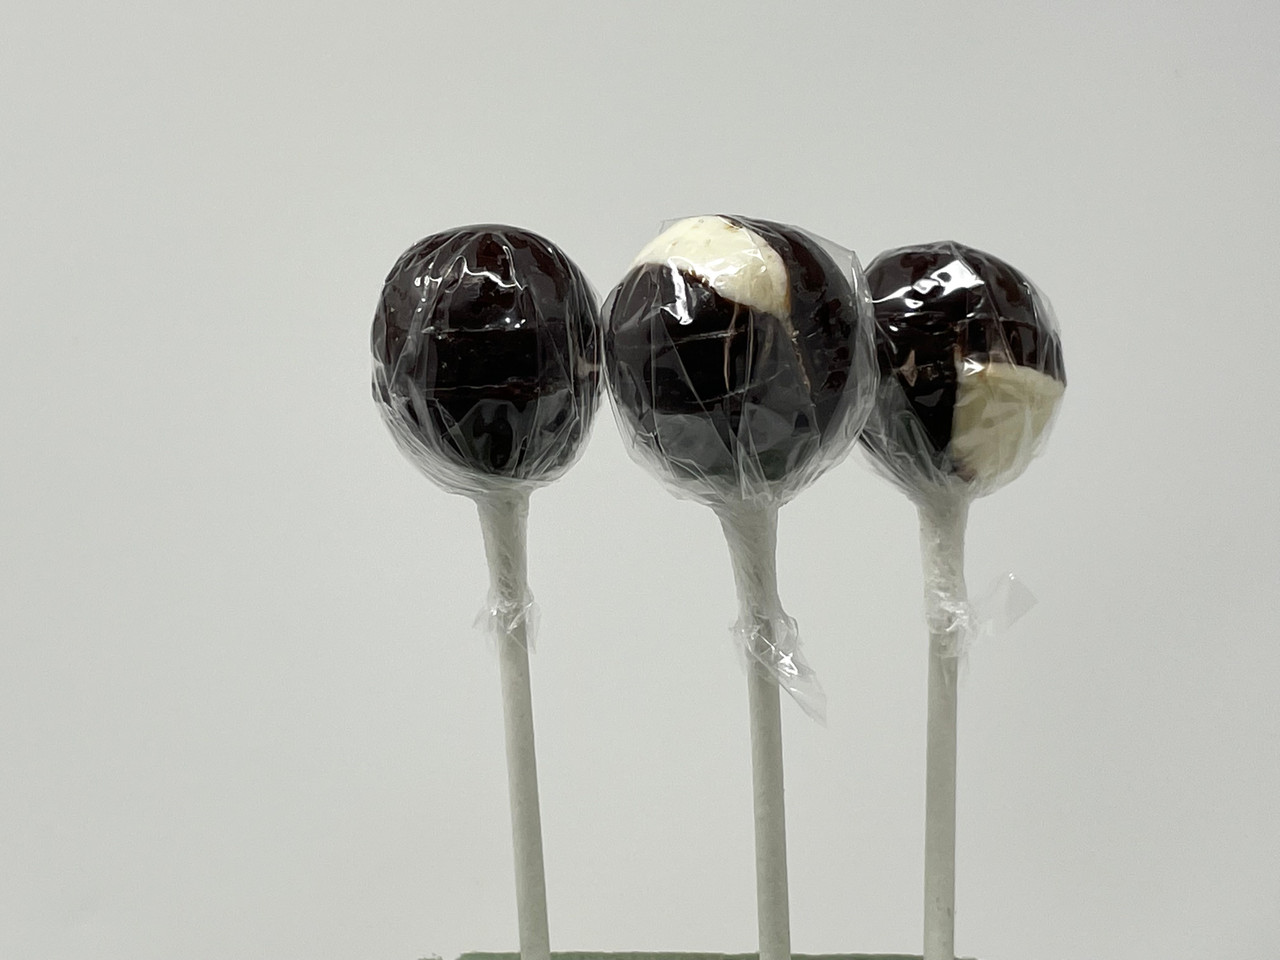 1 X Single Choco-Vanille Ball Lollipop Lolly - myGermanCandy.Com